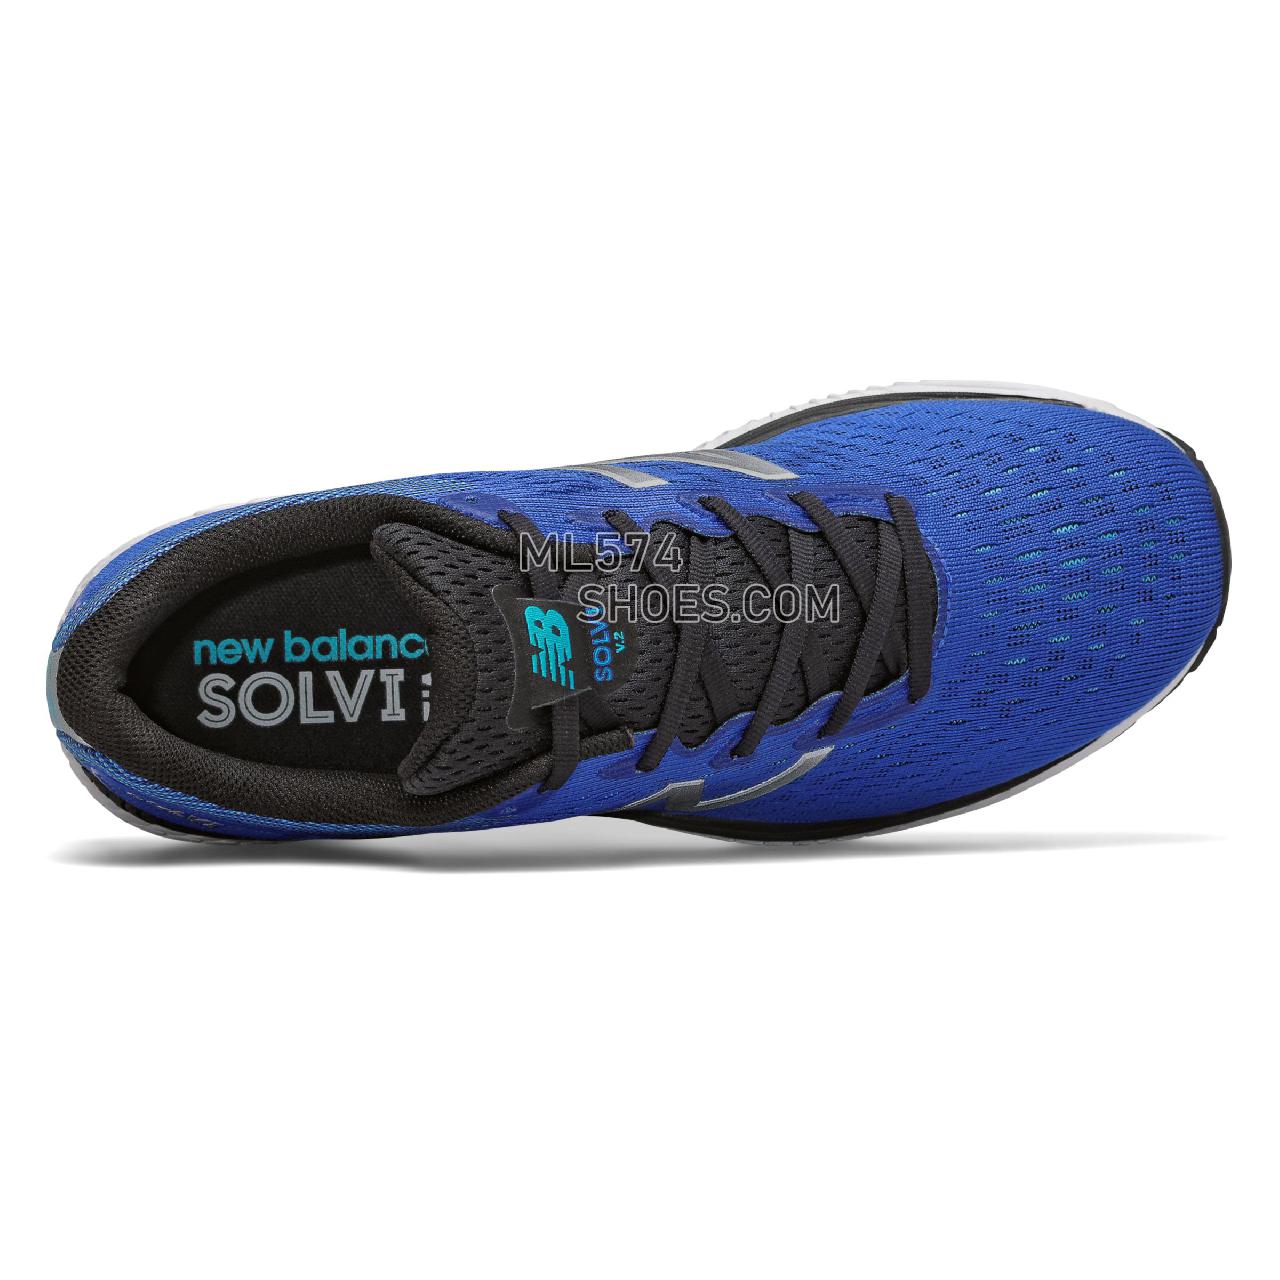 New Balance Solvi v2 - Men's Solvi v2 - Vivid Cobalt with Black and Bayside - MSOLVLC2